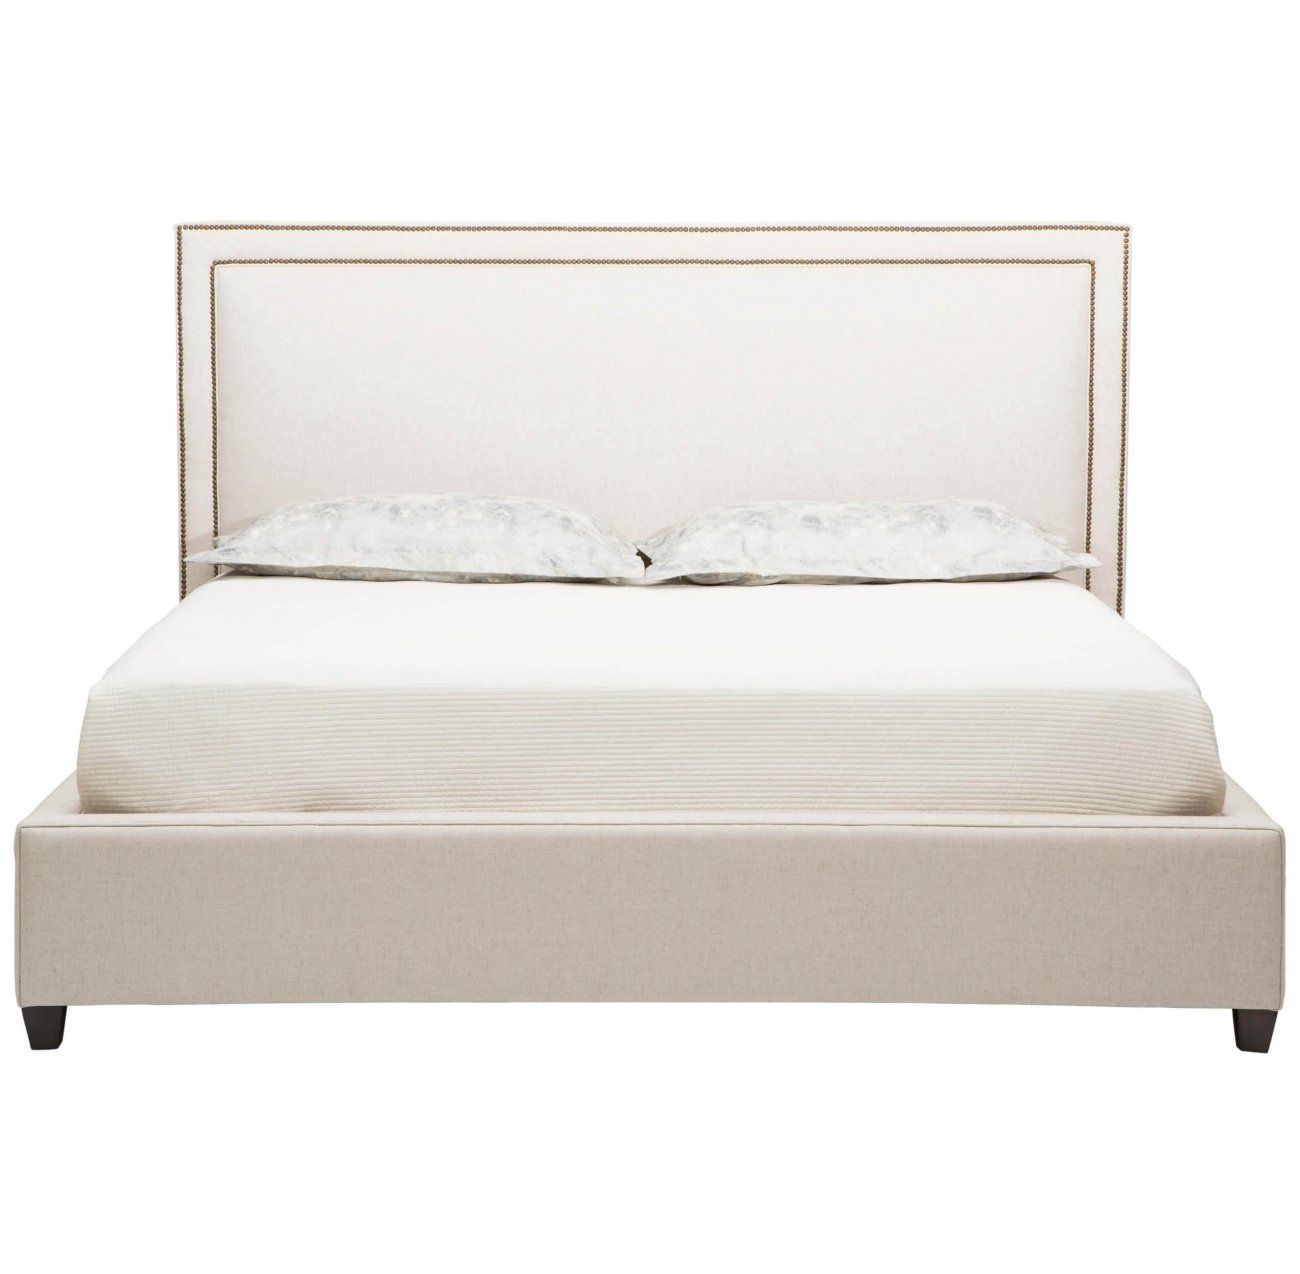 Double bed 160x200 beige with low back Dakota